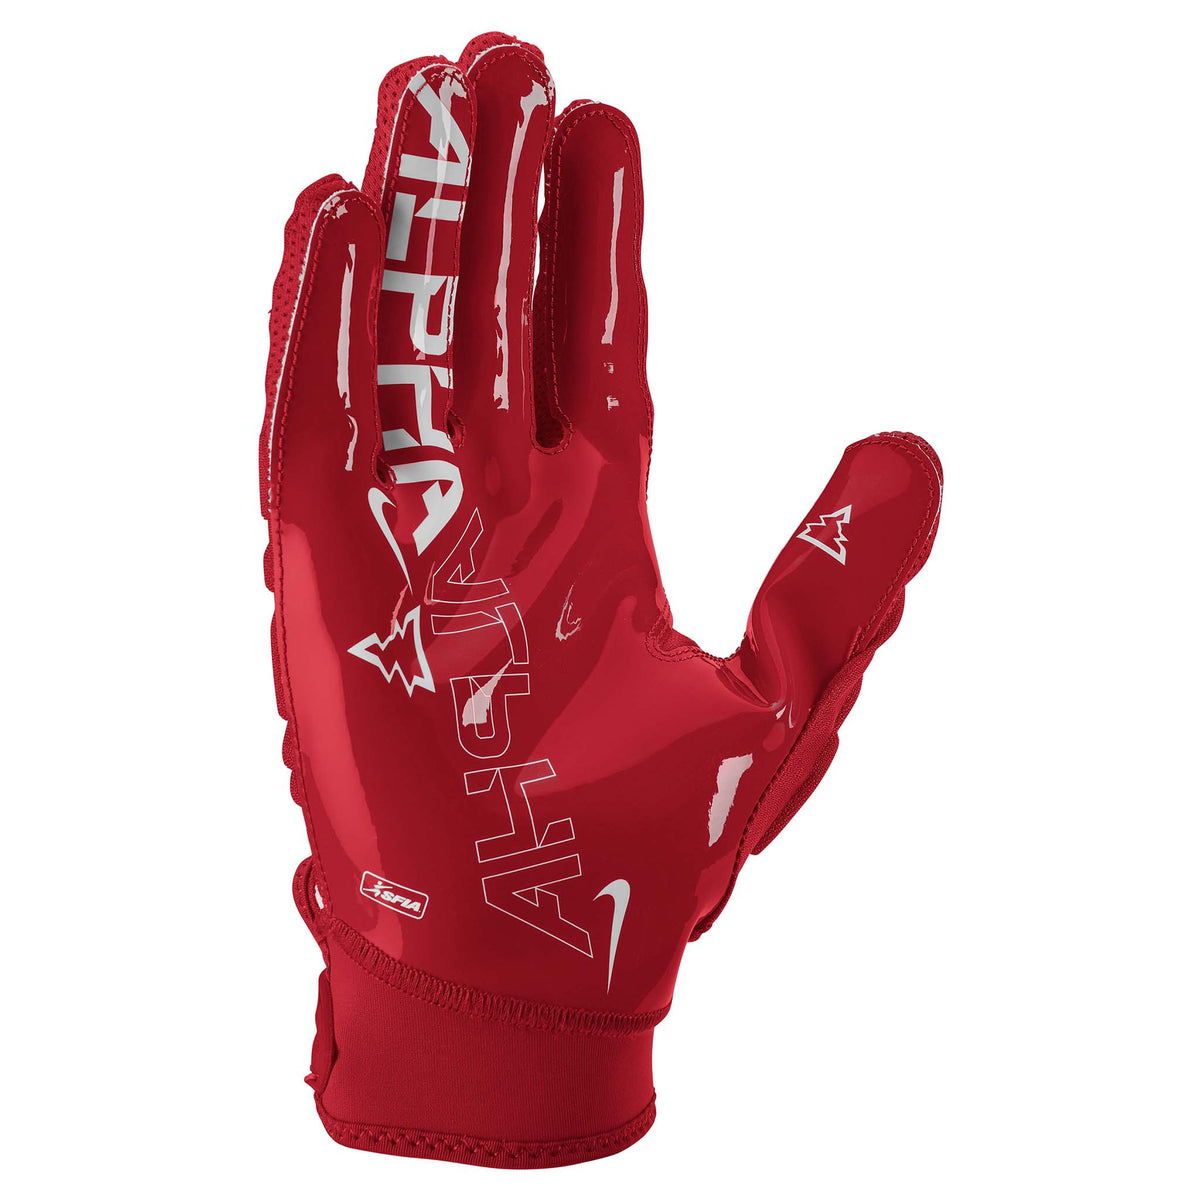 Nike Superbad 6.0 gants de football américain pour adultes - red / university red paume